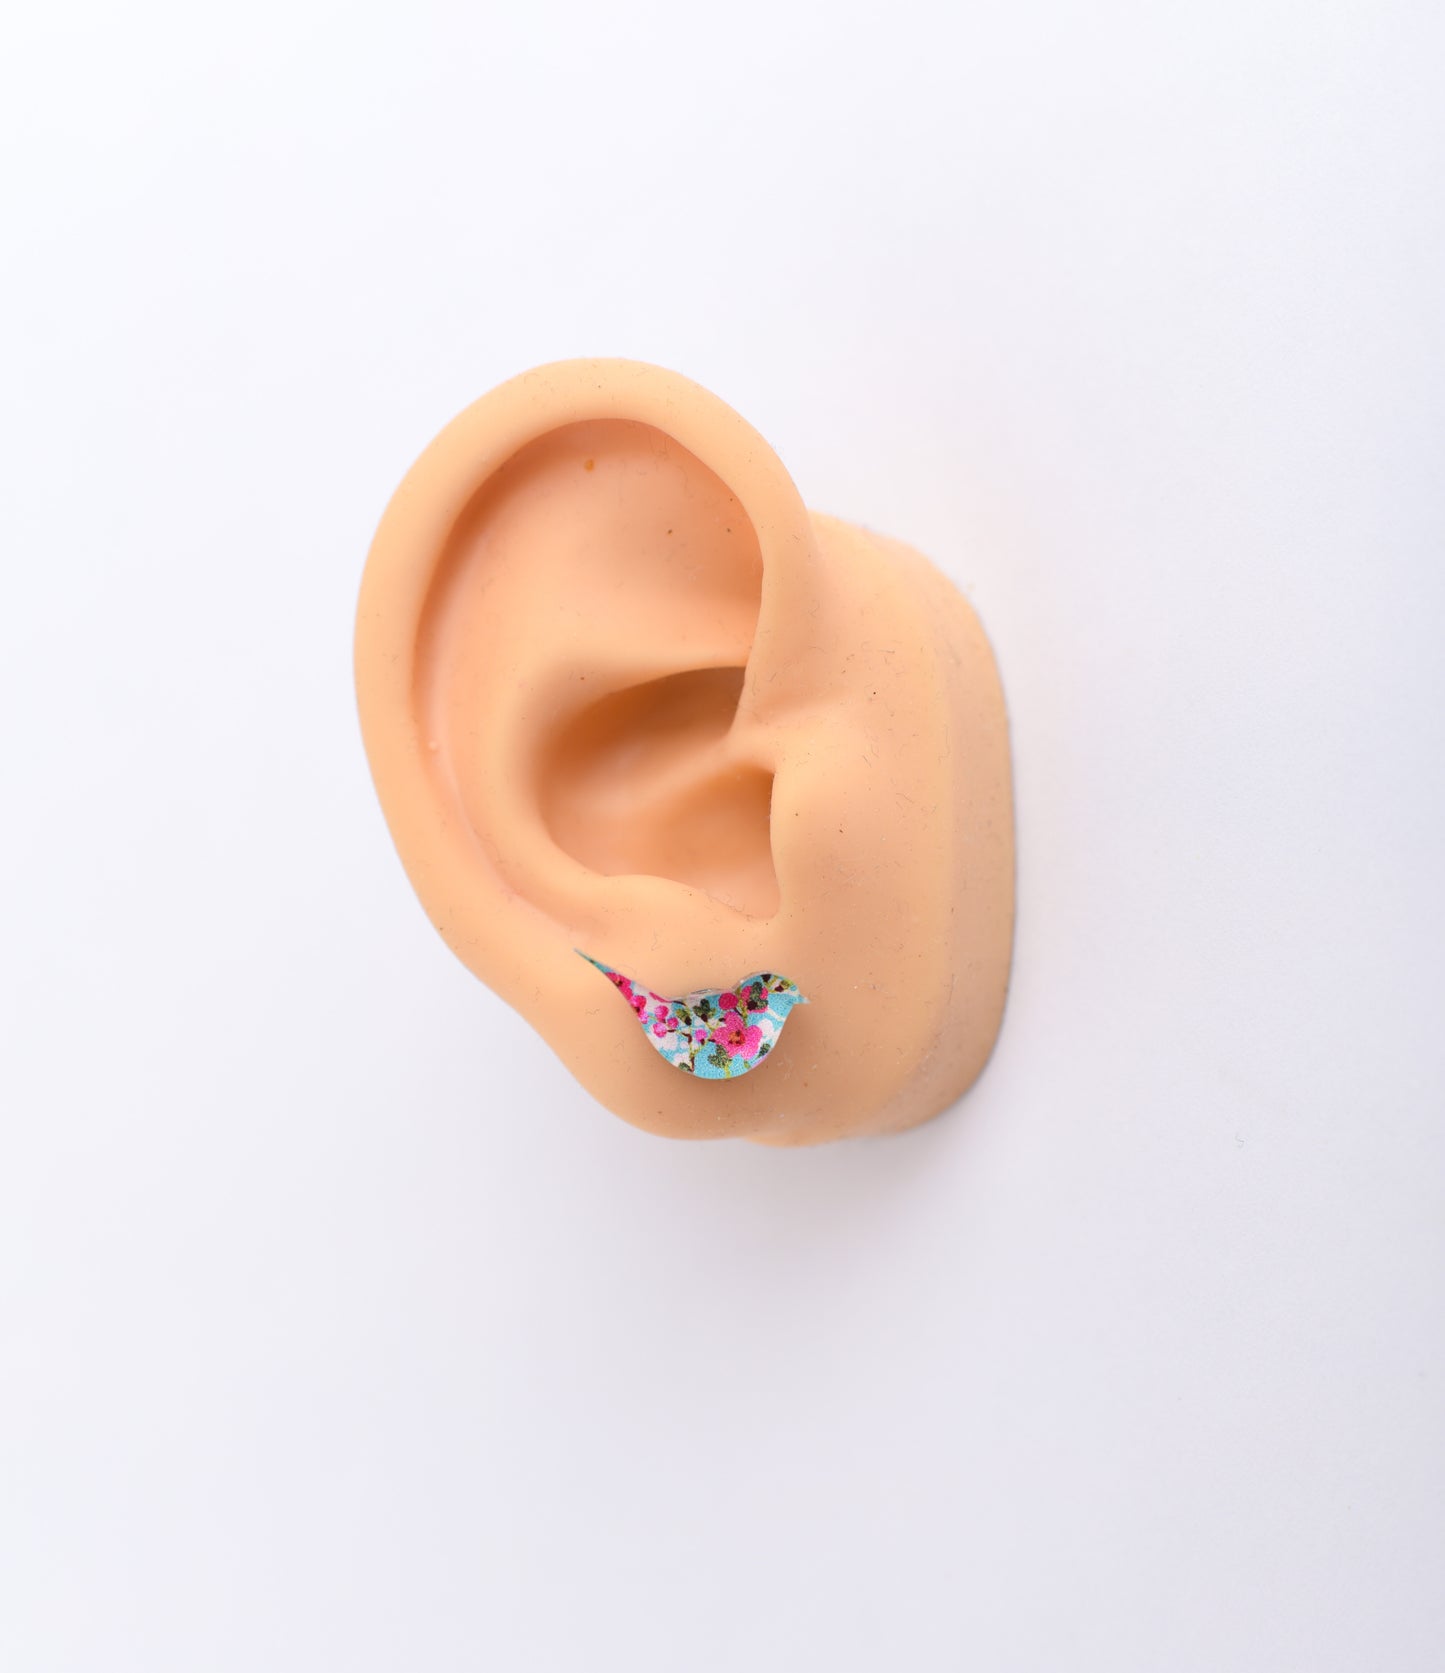 Cherry Blossom Bird Earrings with Titanium Posts